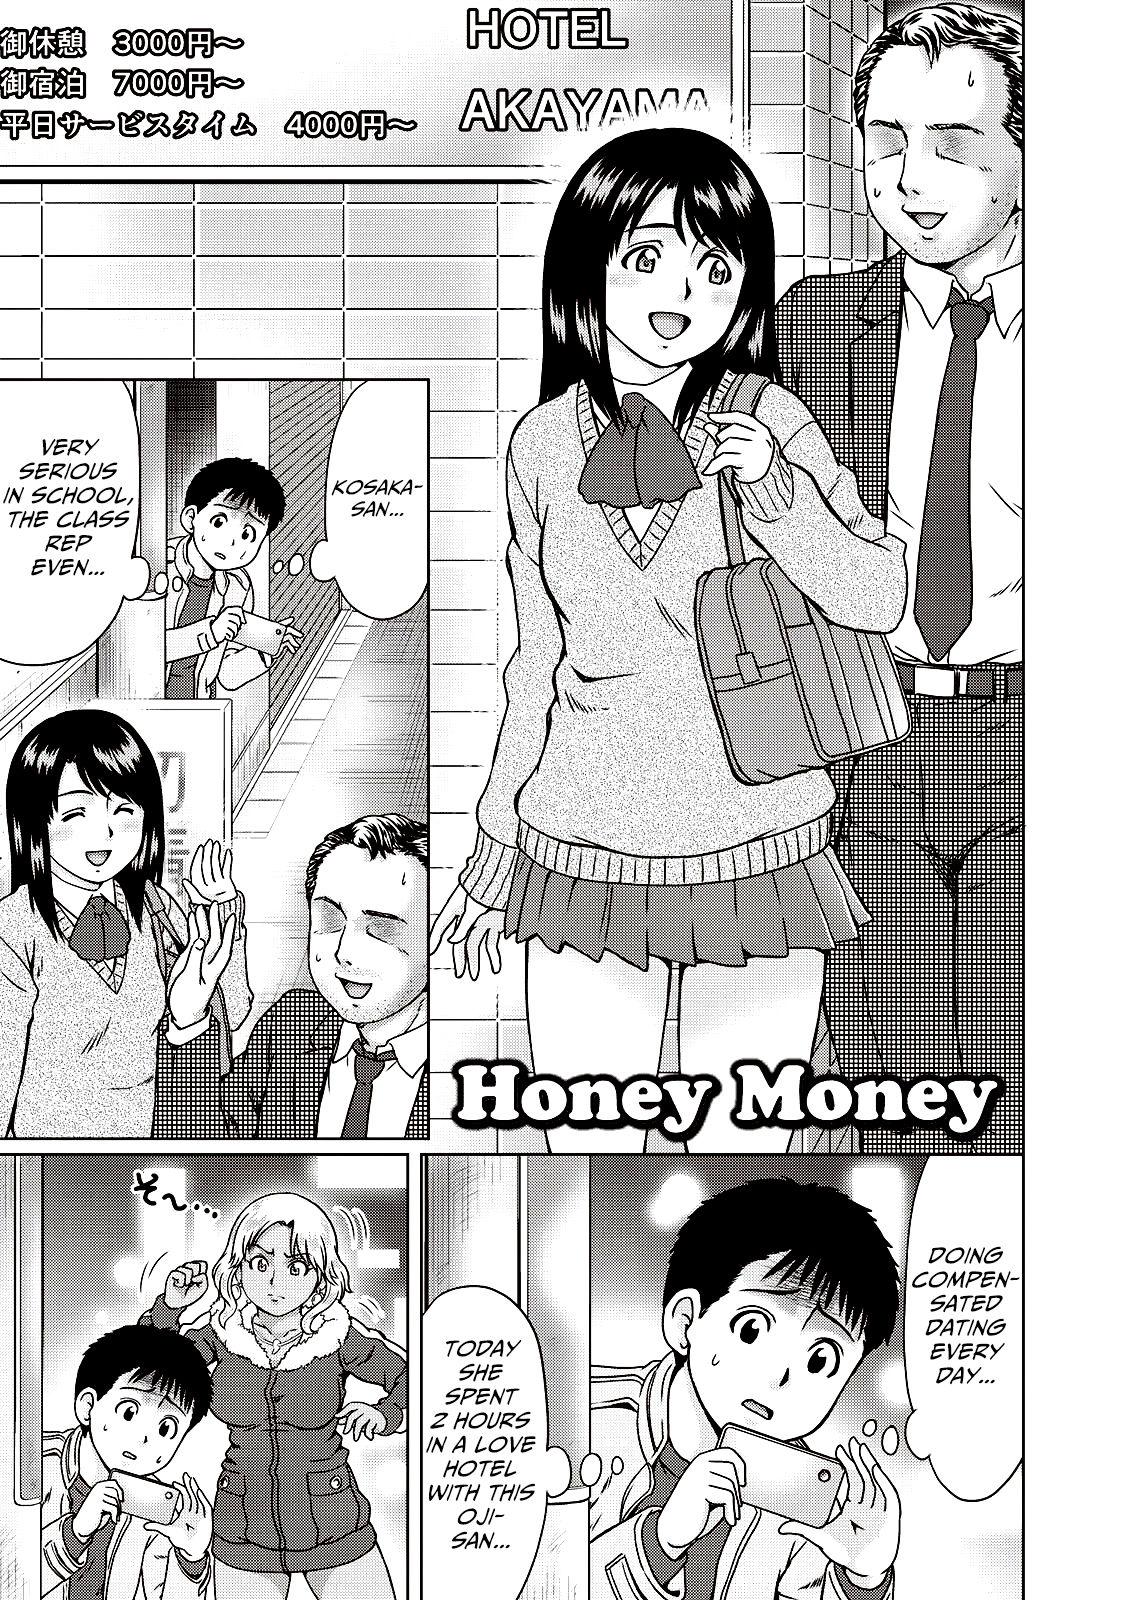 Punk Honey Money Fresh - Page 1